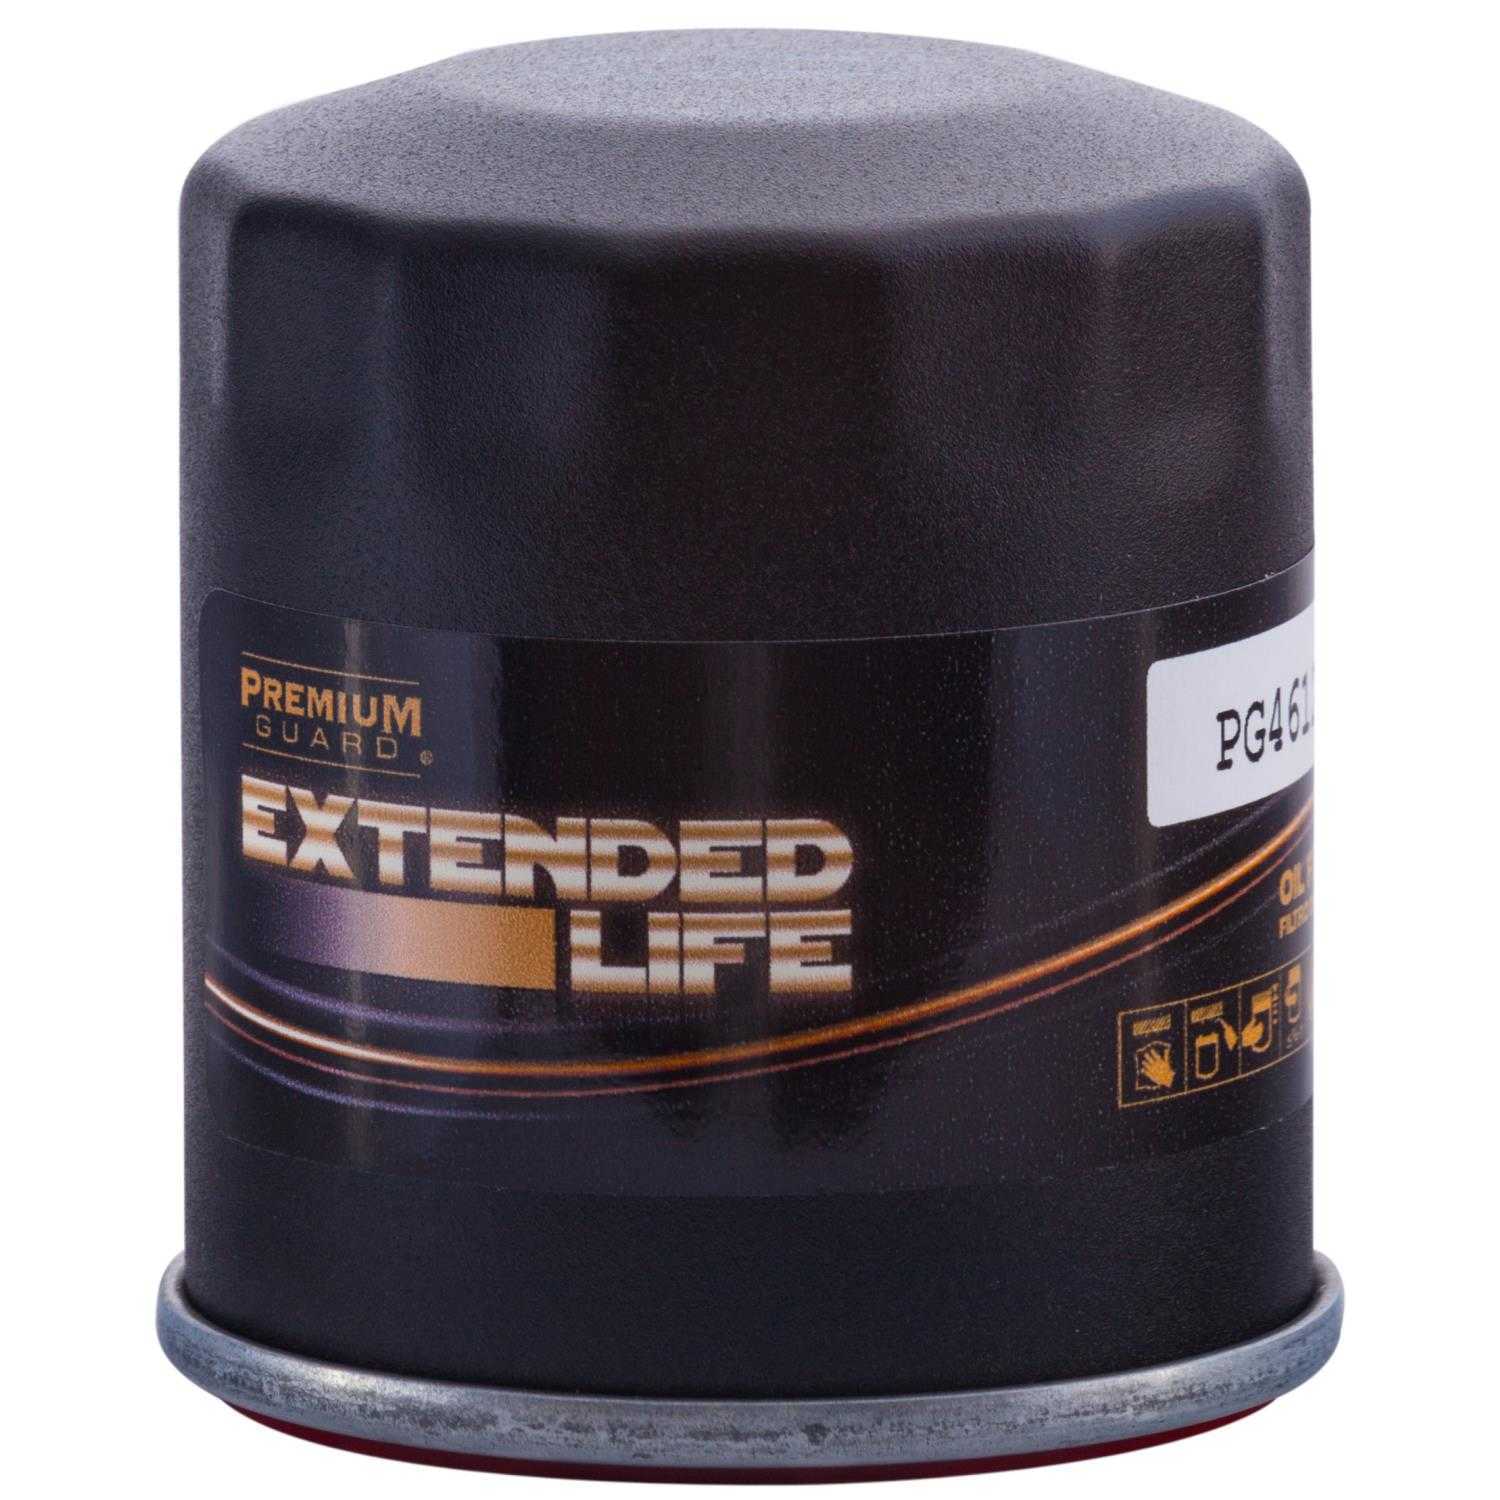 PREMIUM GUARD - Extended Life Oil Filter - PRG PG4612EX